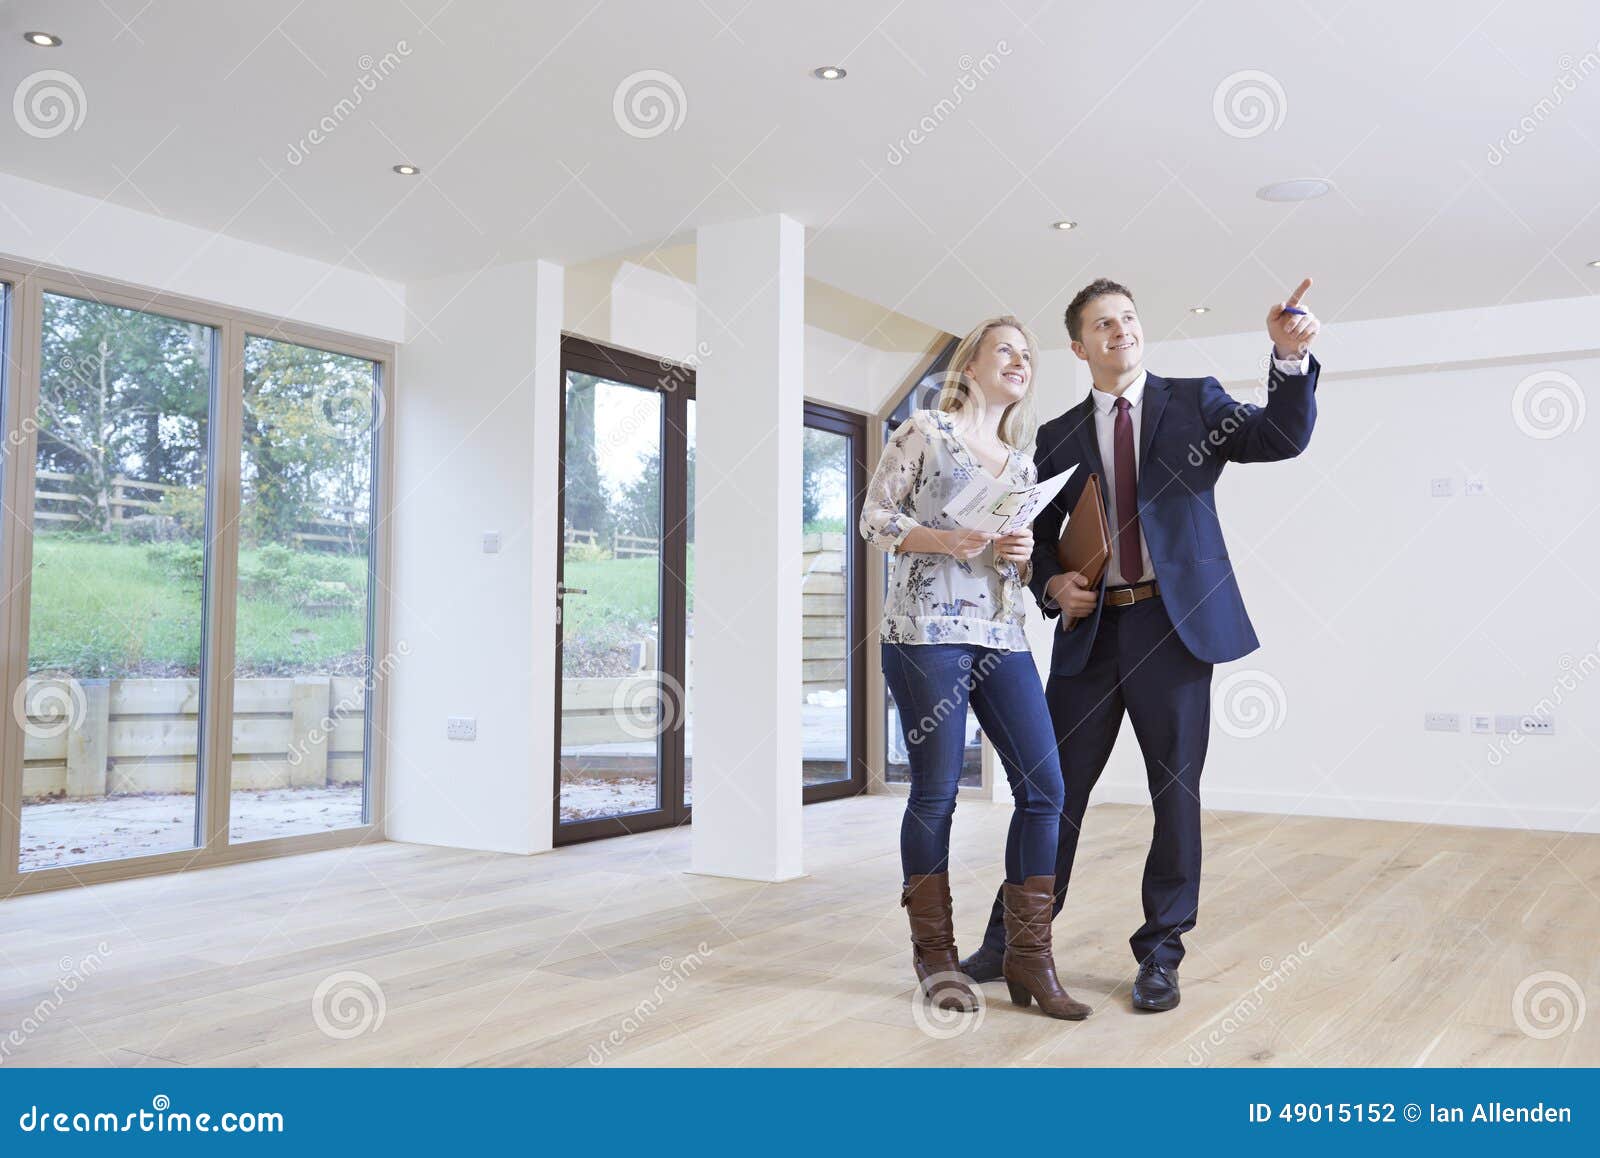 estate agent showing prospective female buyer around property